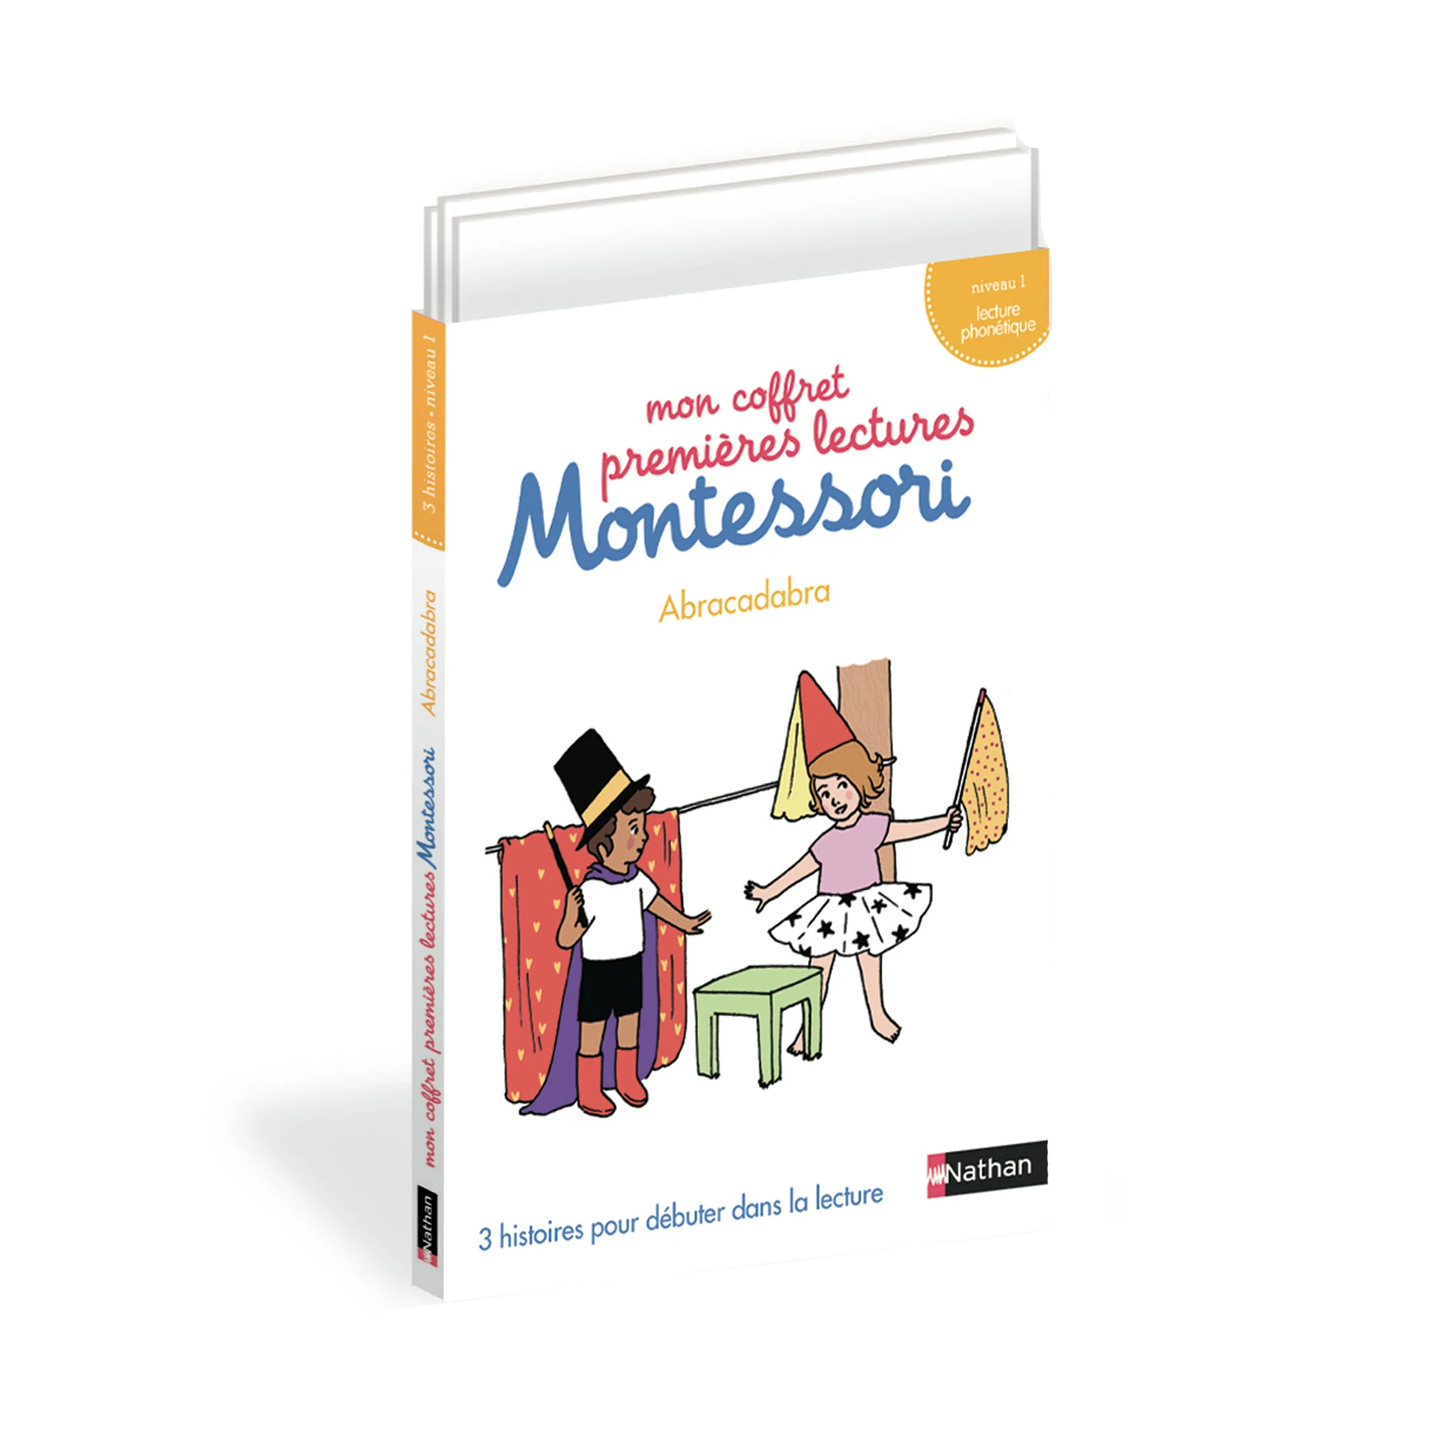 Mon coffret premières lectures Montessori - Abracadabra ! - Niveau 1 -Nathan